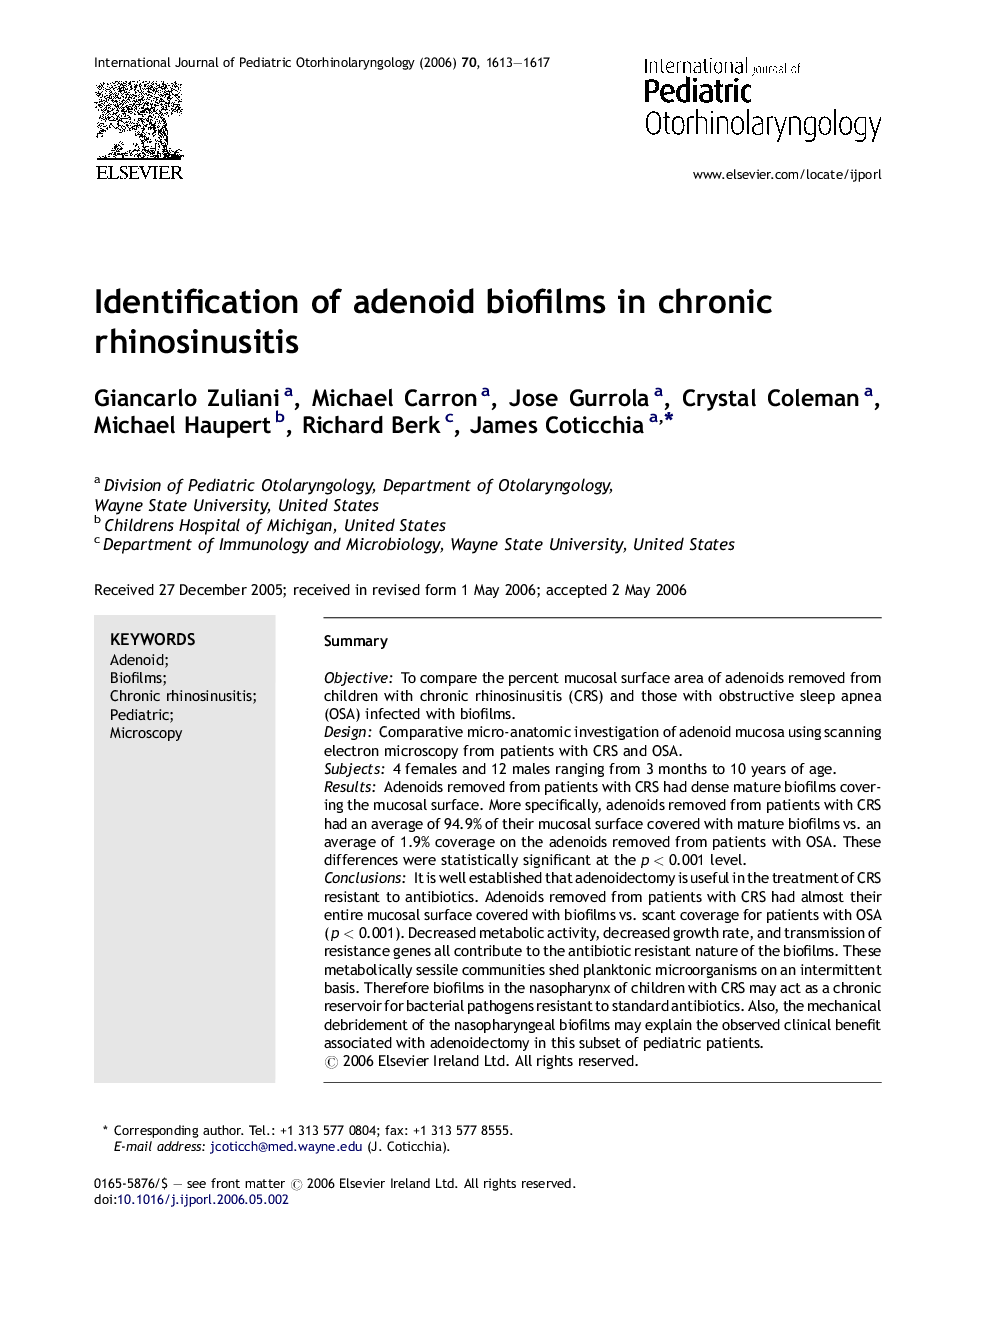 Identification of adenoid biofilms in chronic rhinosinusitis